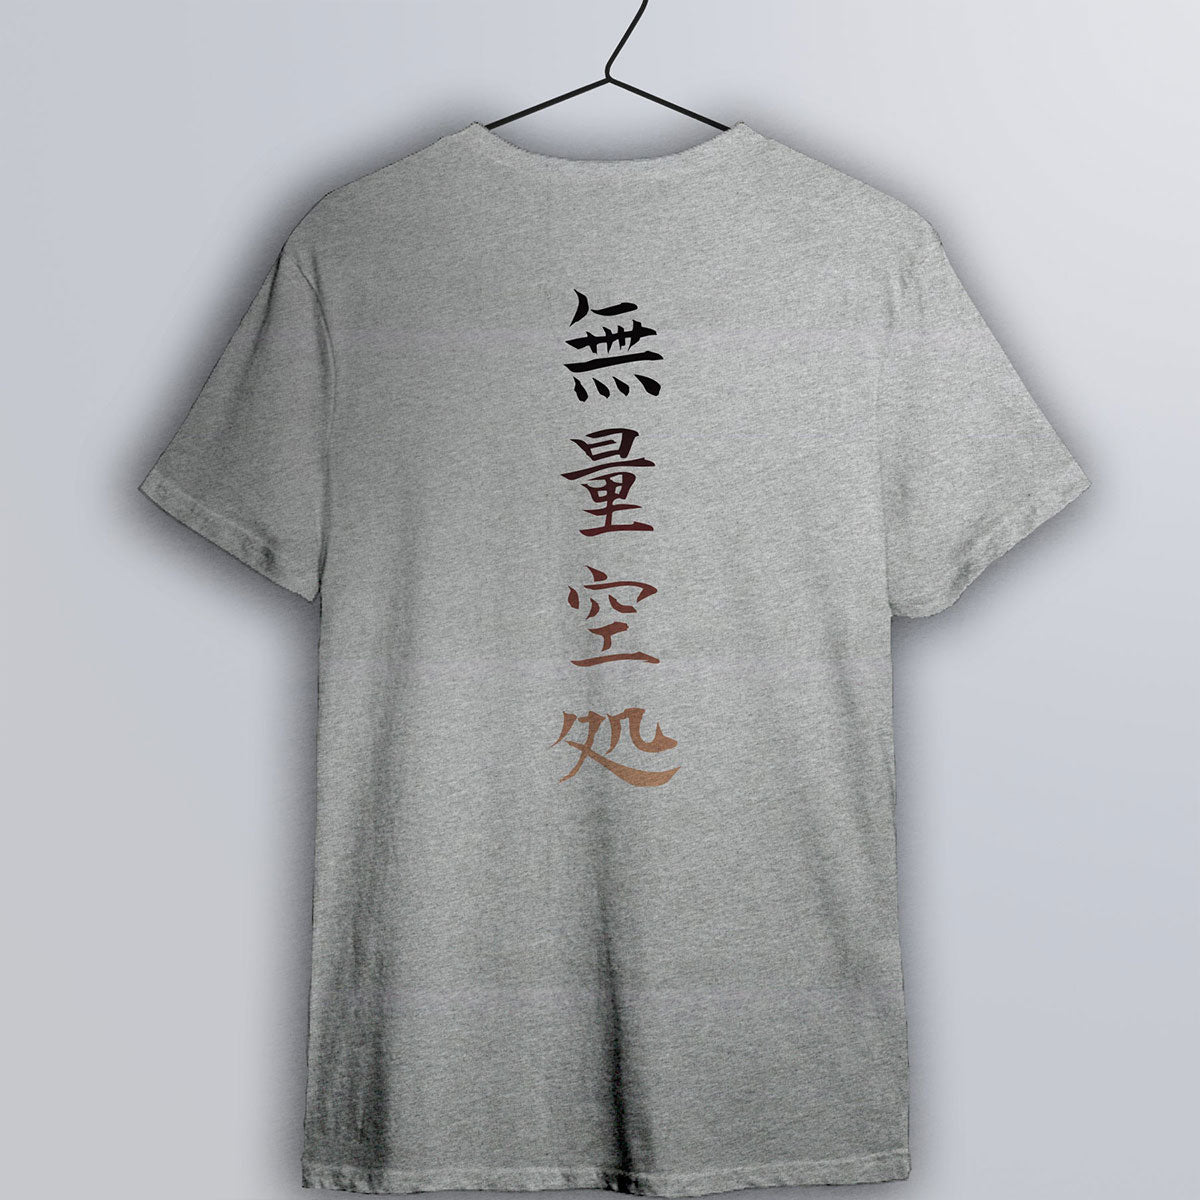 咒術迴戰 T-shirt 無量空處 (灰色) 服裝 Microworks Online Store